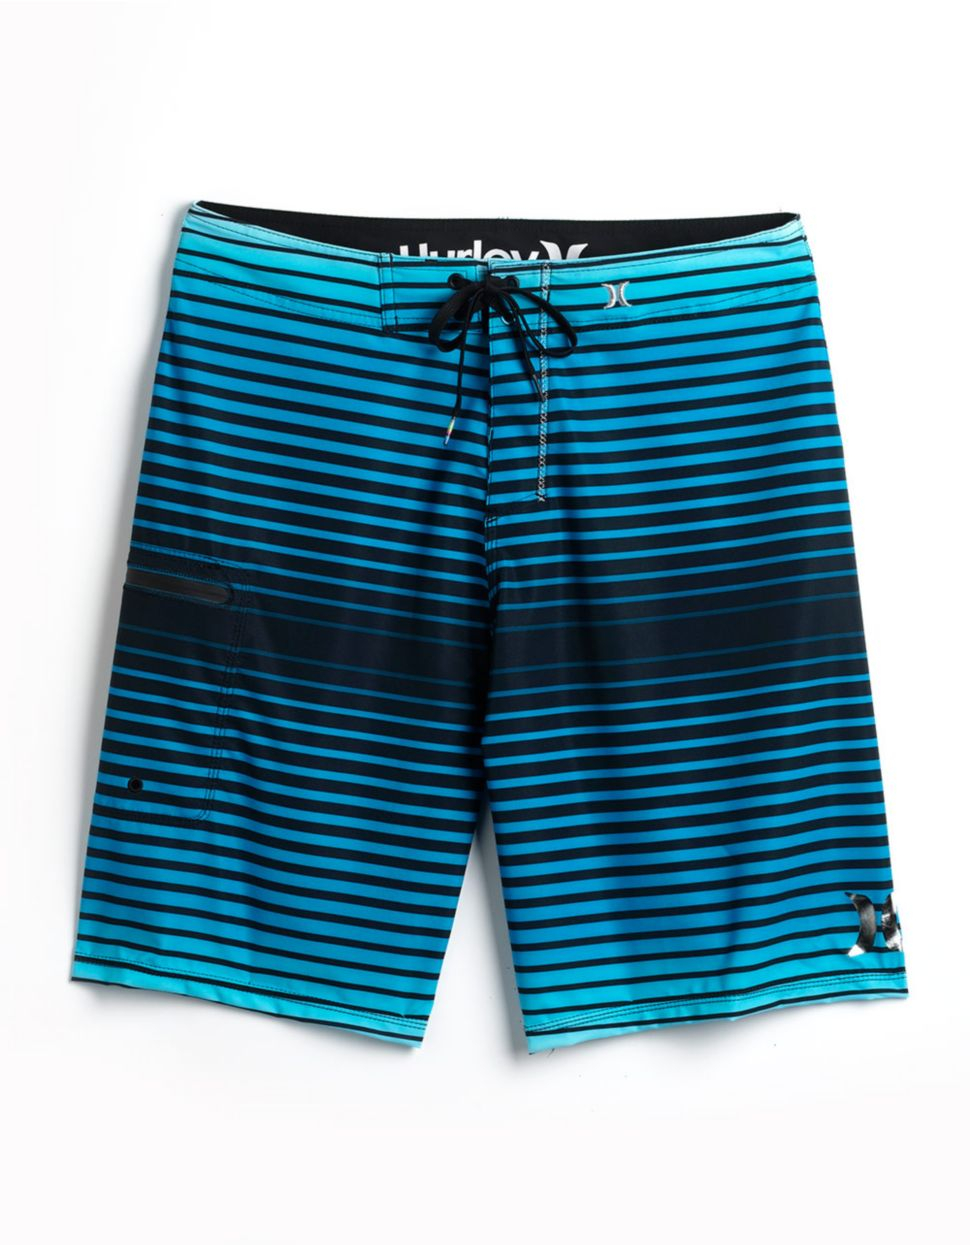 Lyst - Hurley Phantom Board Shorts in Blue for Men